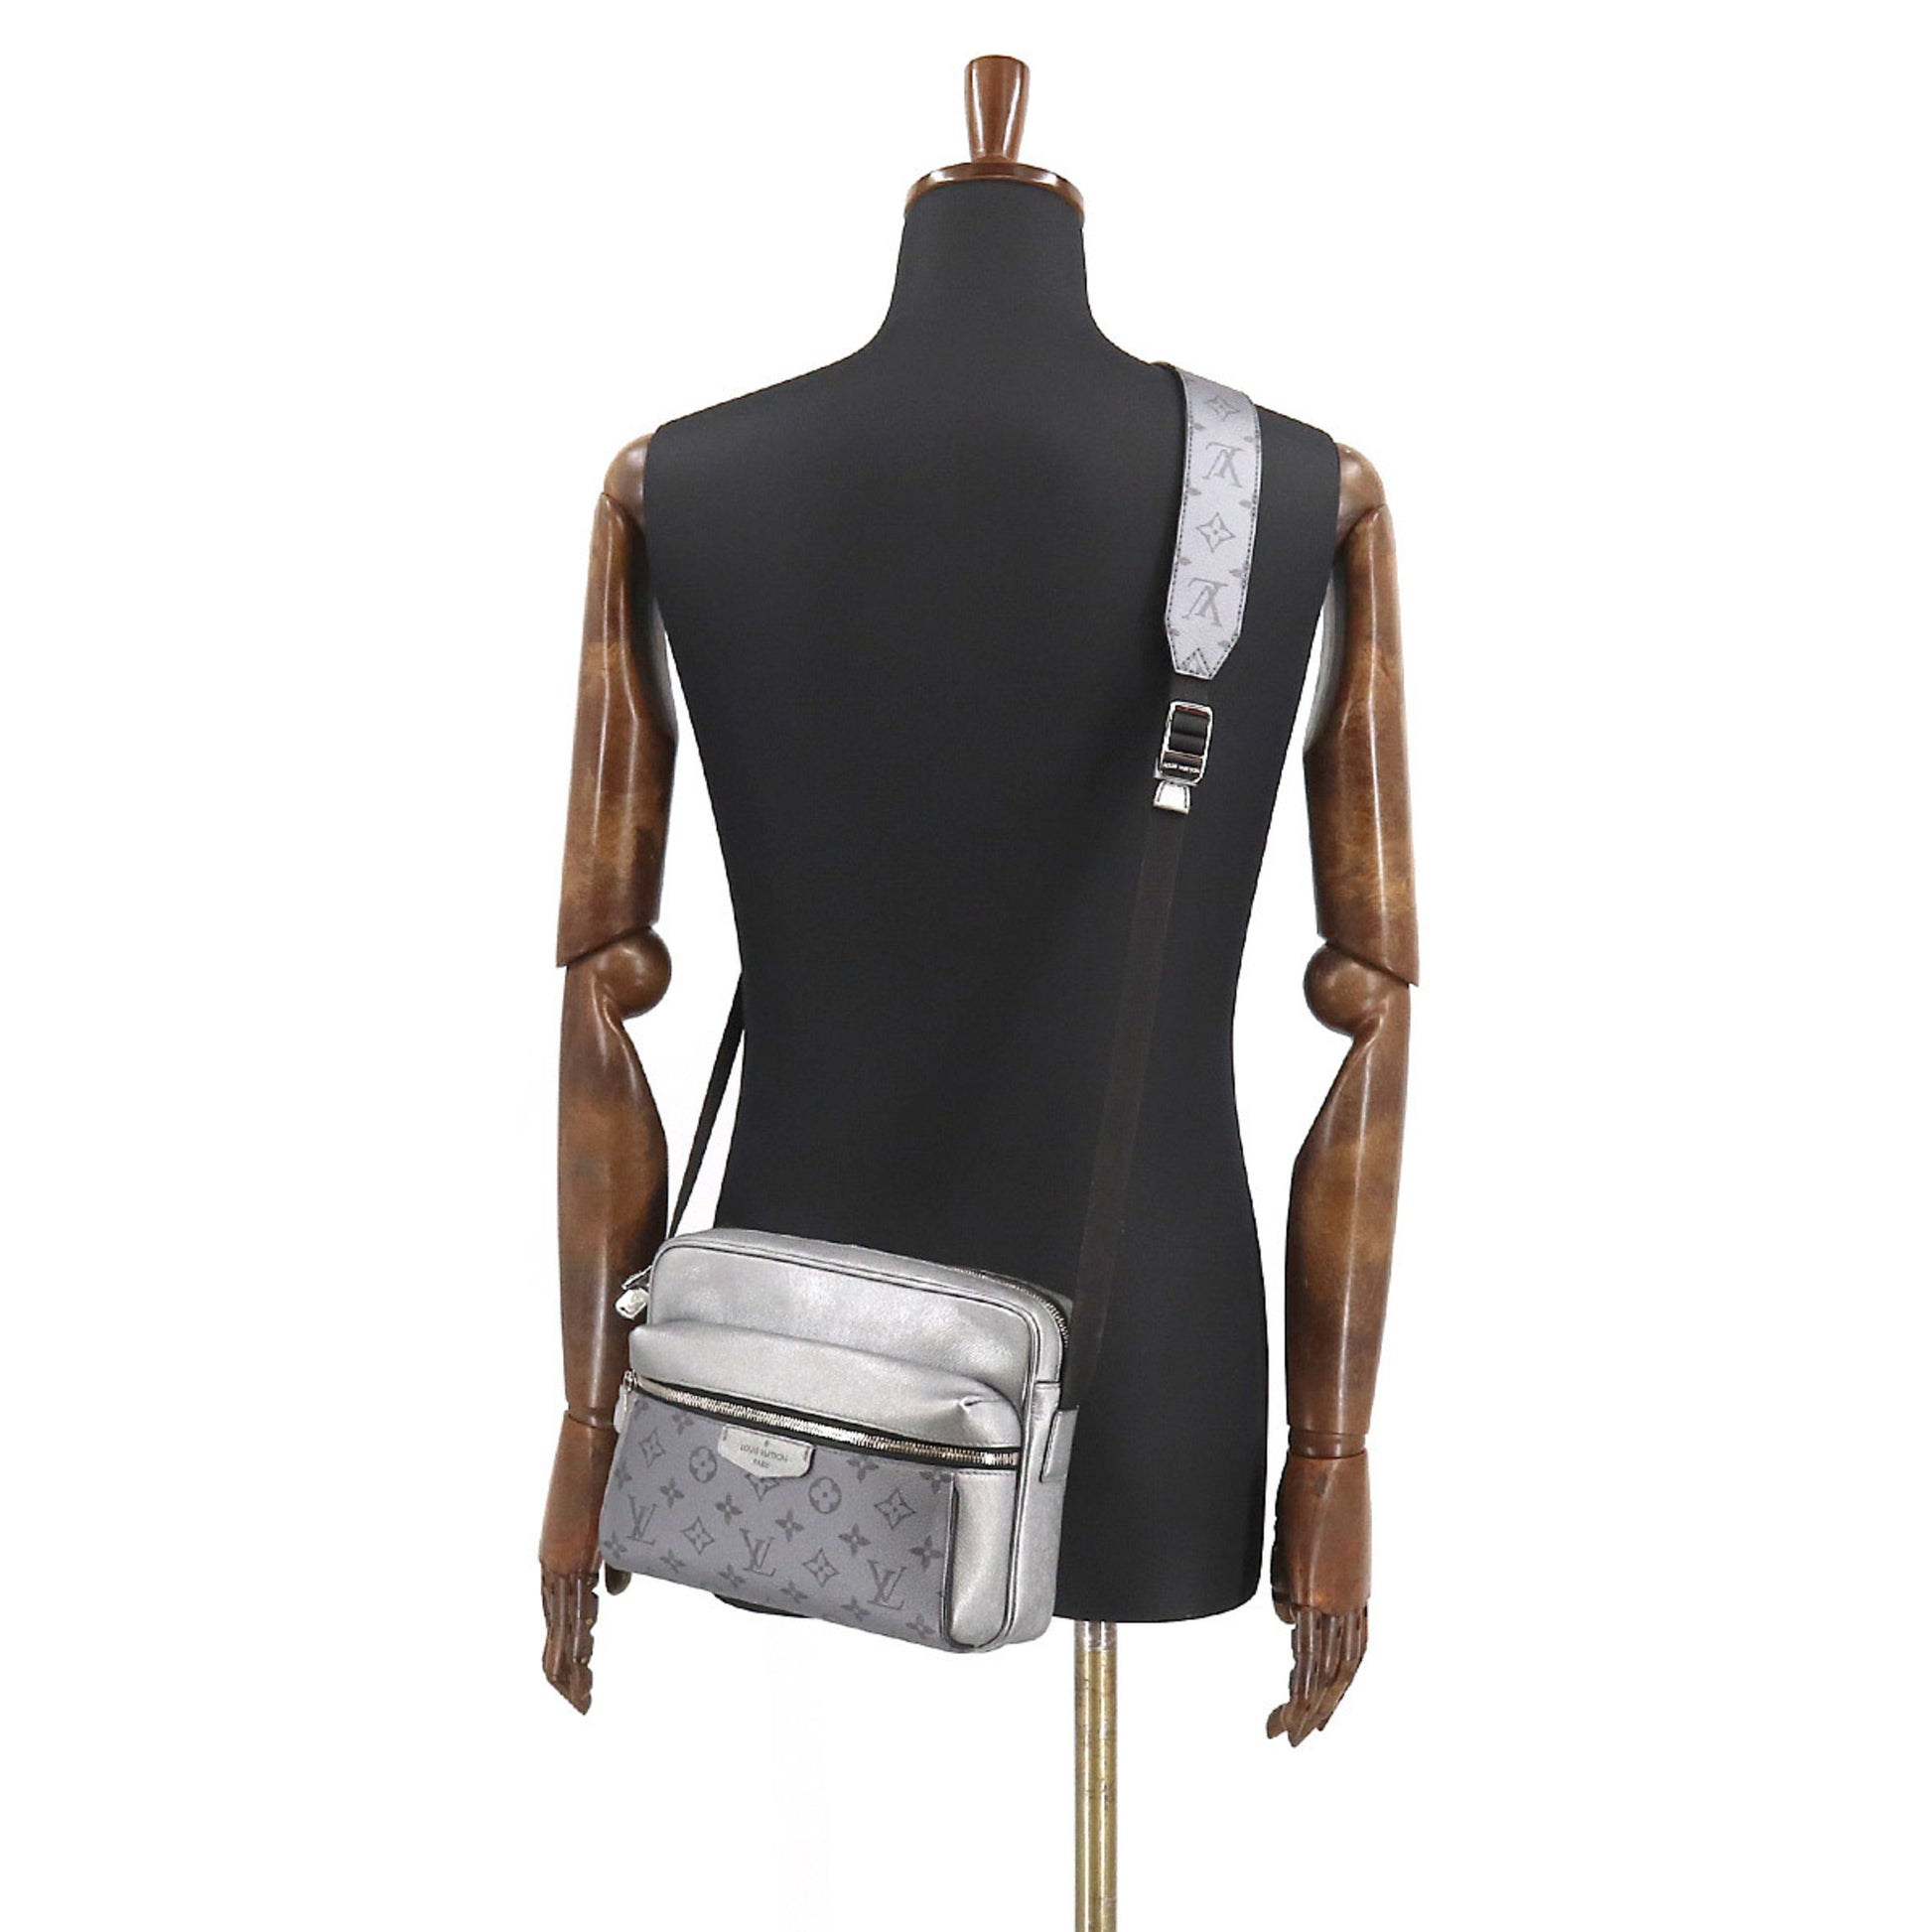 Outdoor Messenger Bag - Luxury Taigarama Black